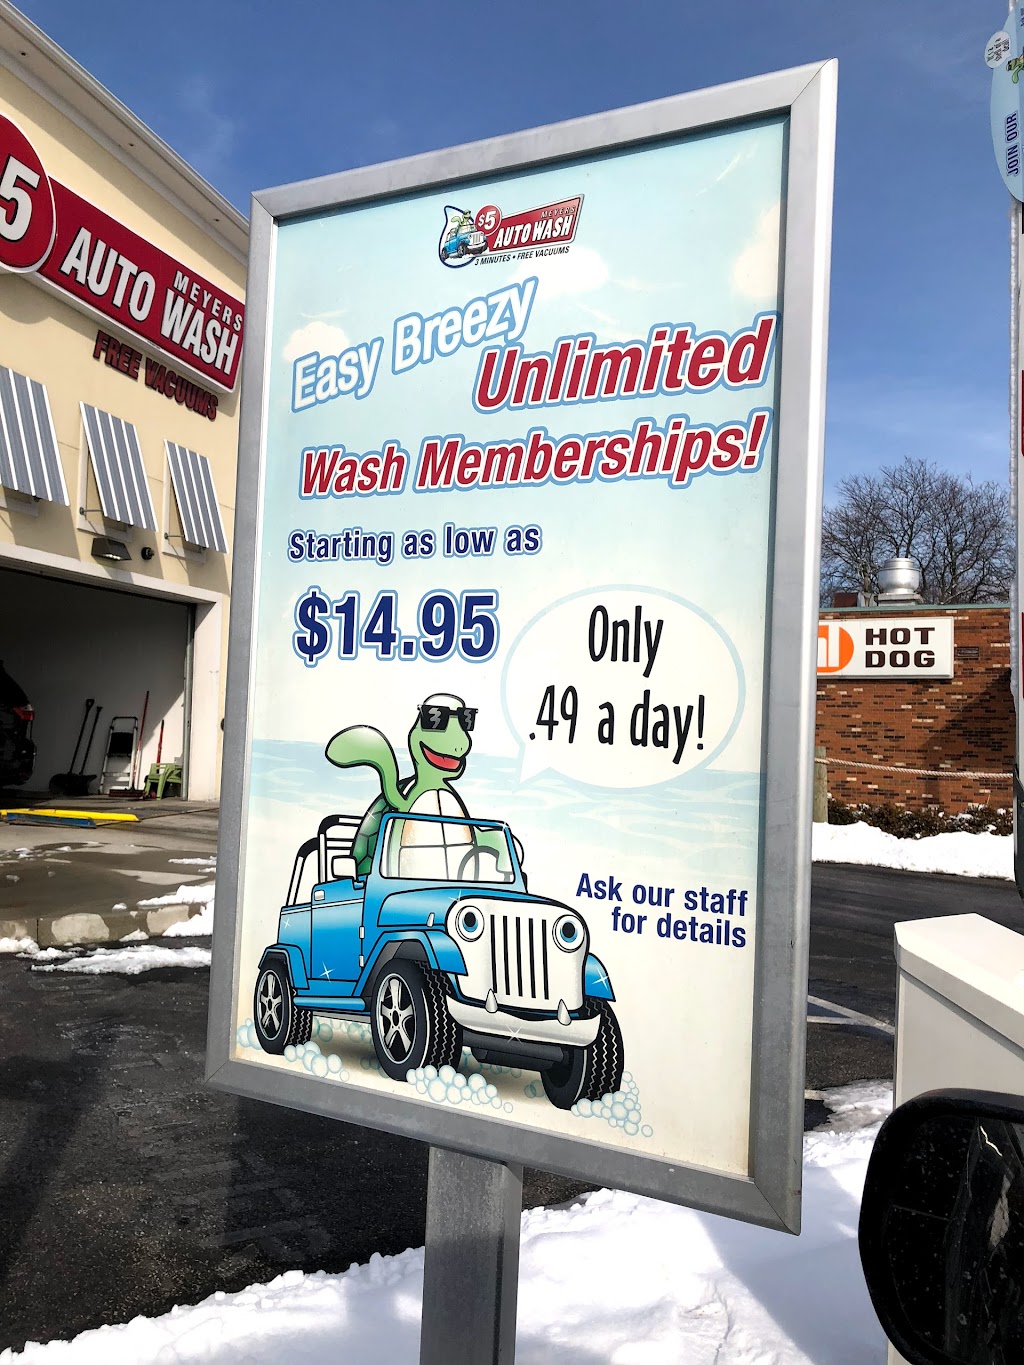 Clean Express Auto Wash - Heatherdowns | 4340 Heatherdowns Blvd, Toledo, OH 43614, USA | Phone: (419) 725-9191